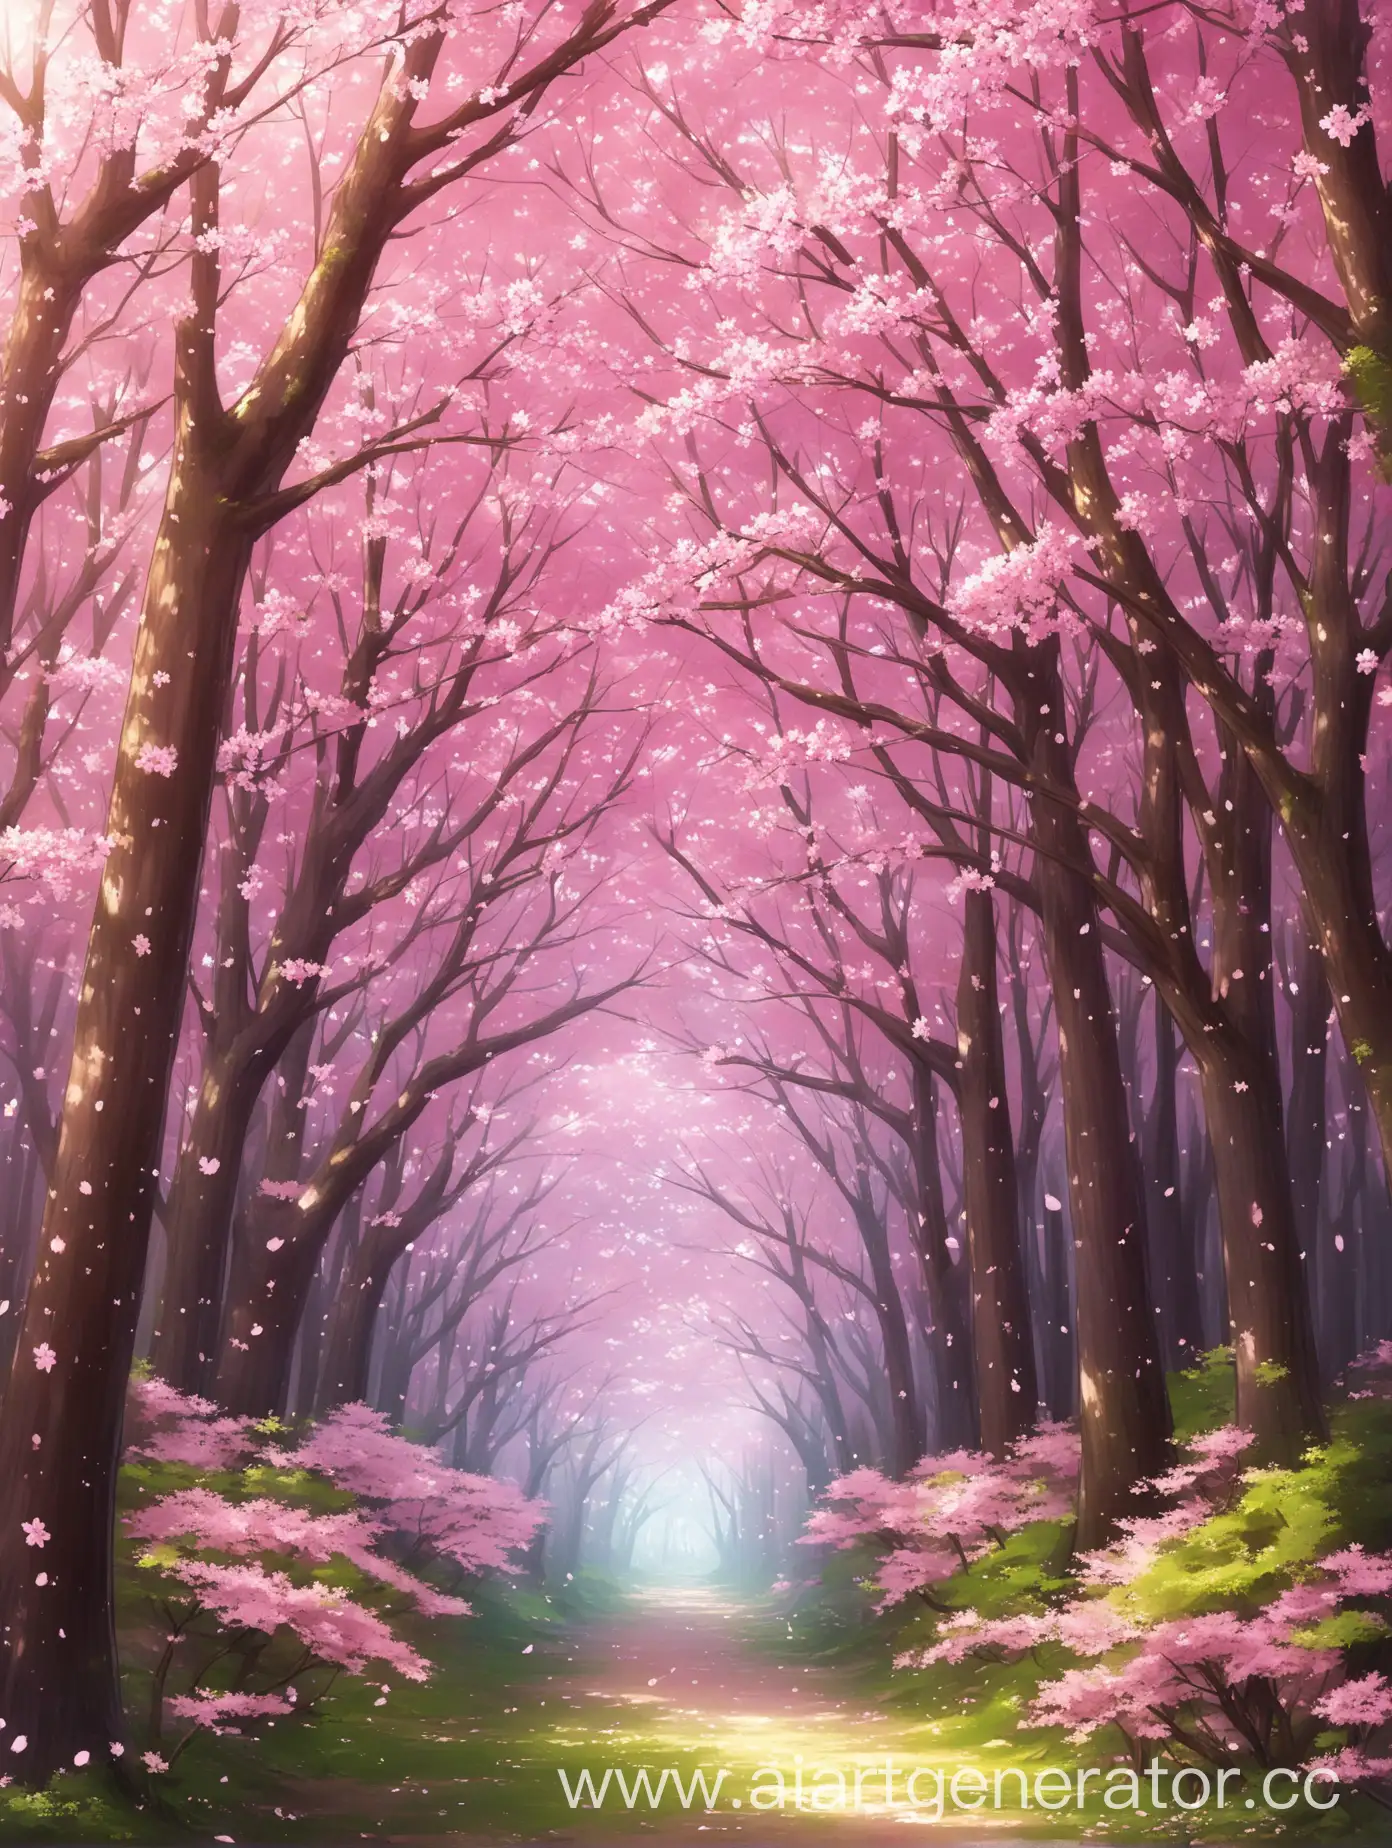 Enchanting-Sakura-Blossoms-in-a-Serene-Forest-Setting